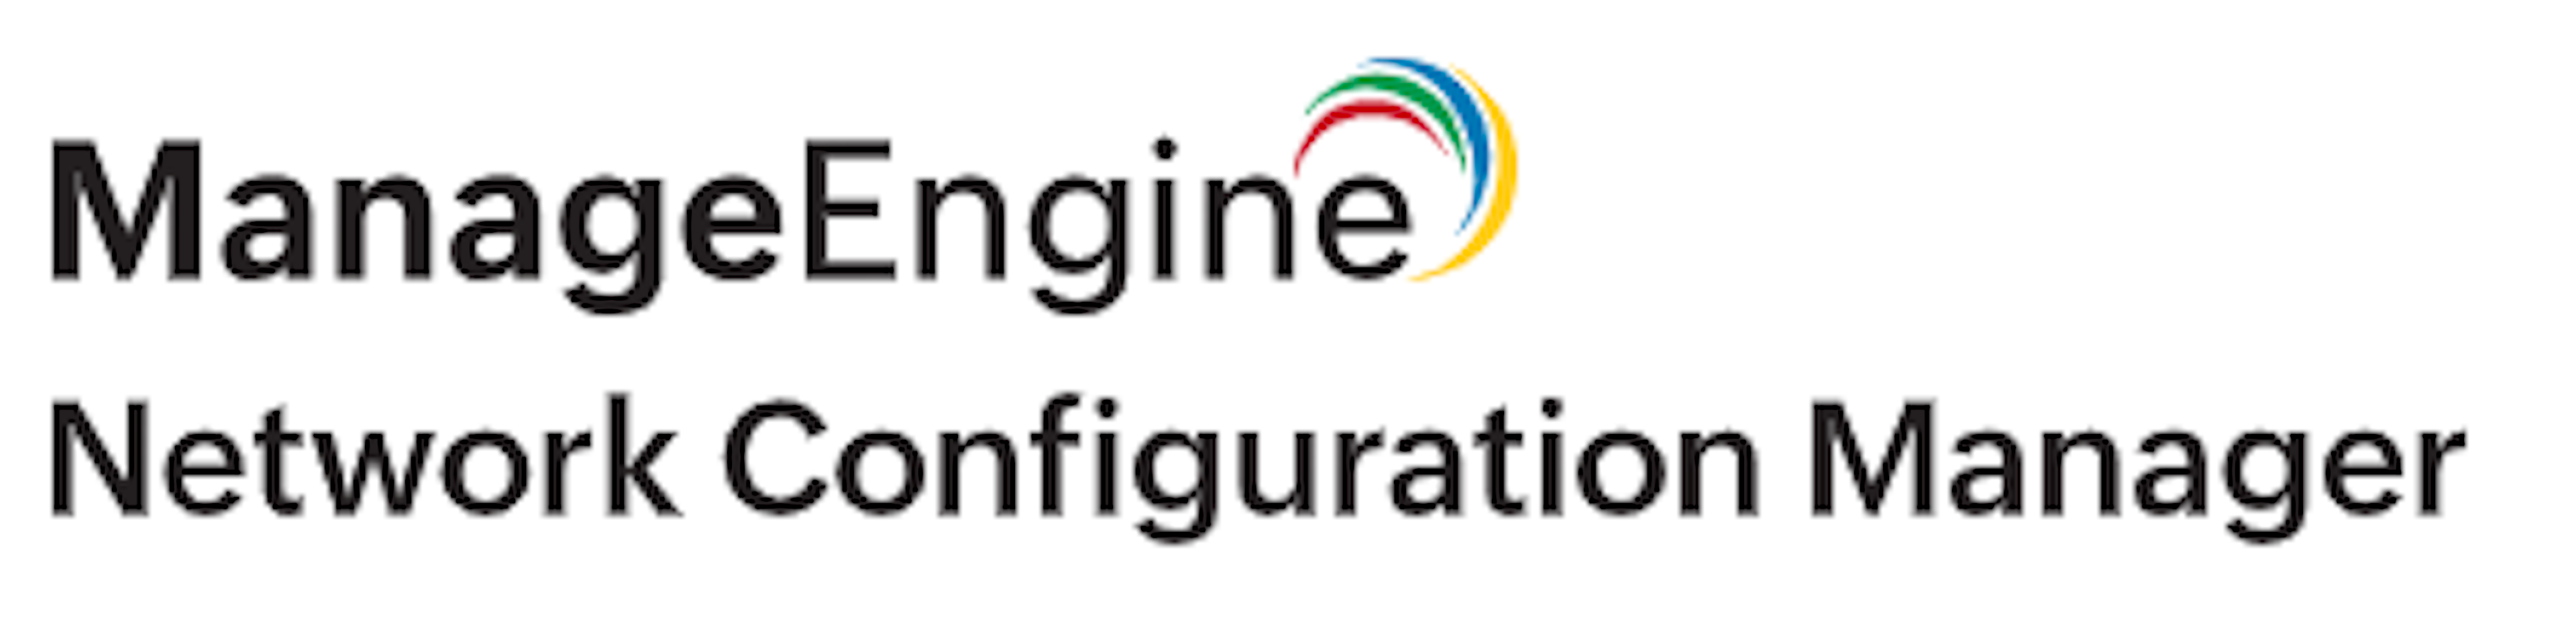 ManageEngine Network Configuration Manager Logo